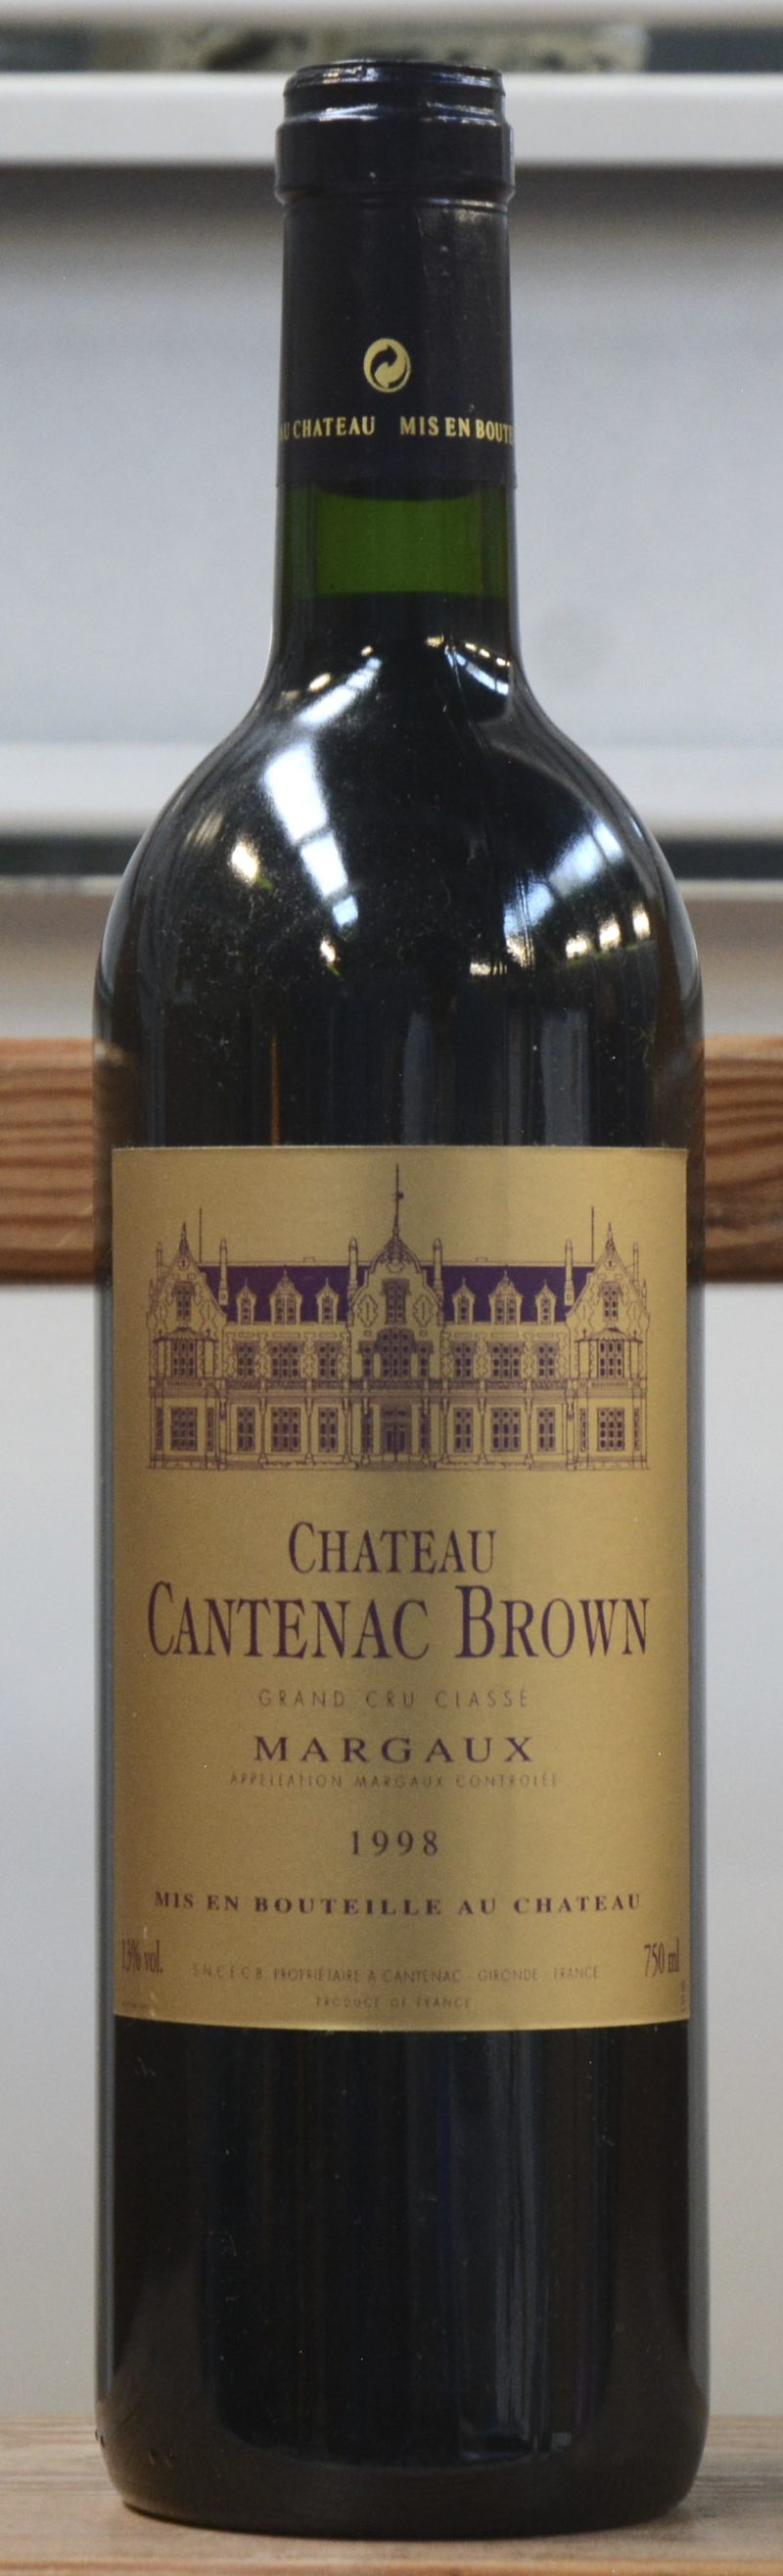 Ch. Cantenac Brown A.C. Margaux 3e grand cru classé  M.C.  1998  aantal: 1 Bt.